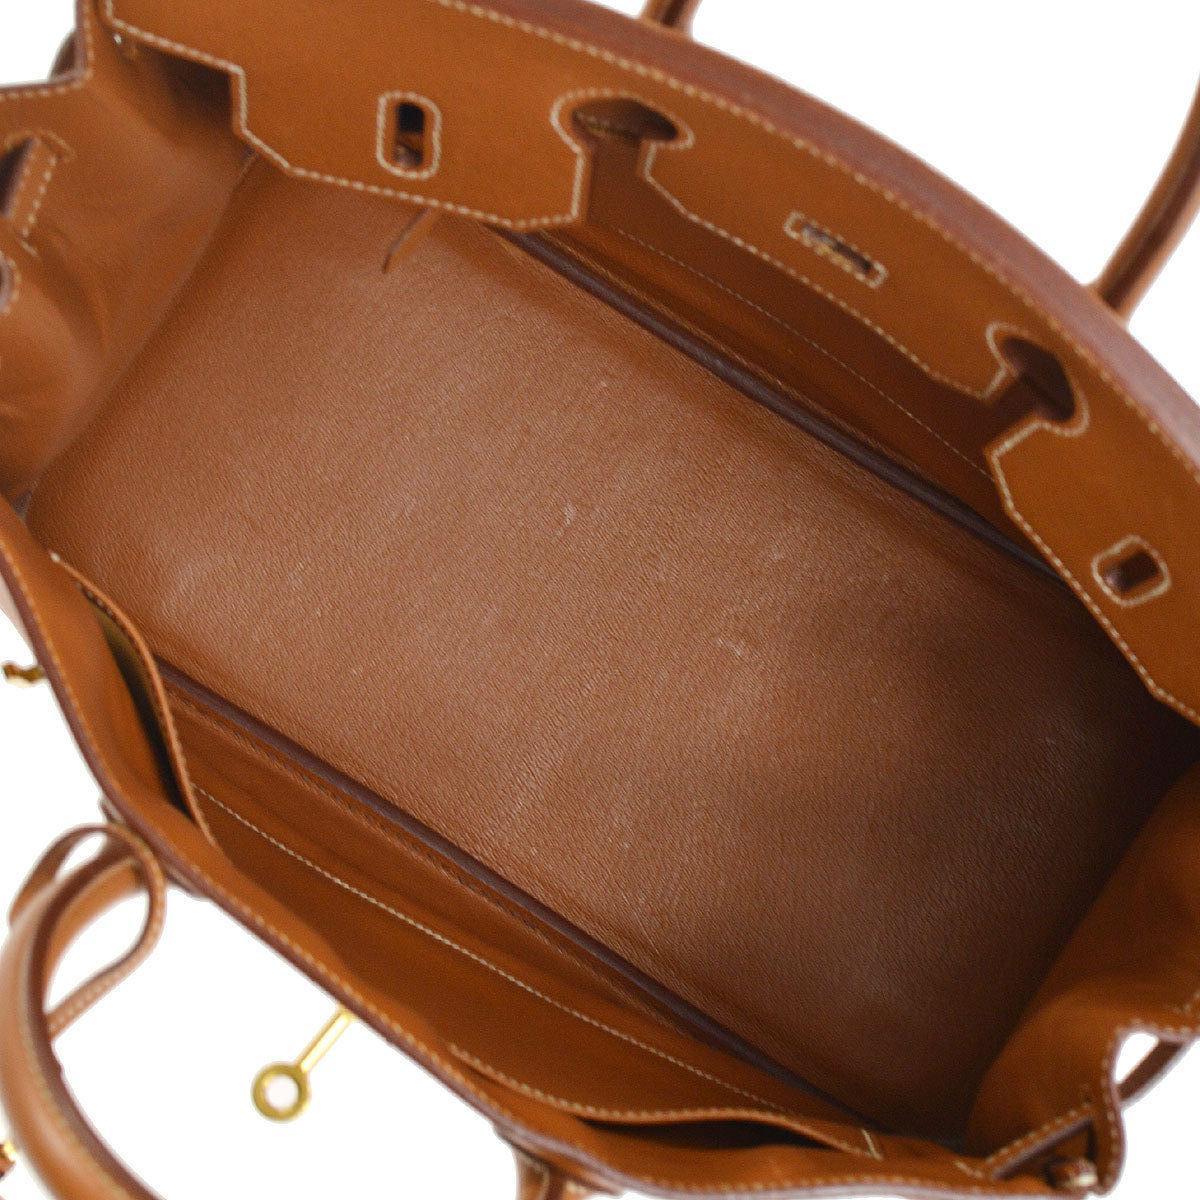 Hermes Birkin 32 Cognac Leather Gold Top Handle Satchel Travel Tote Bag in Box 2